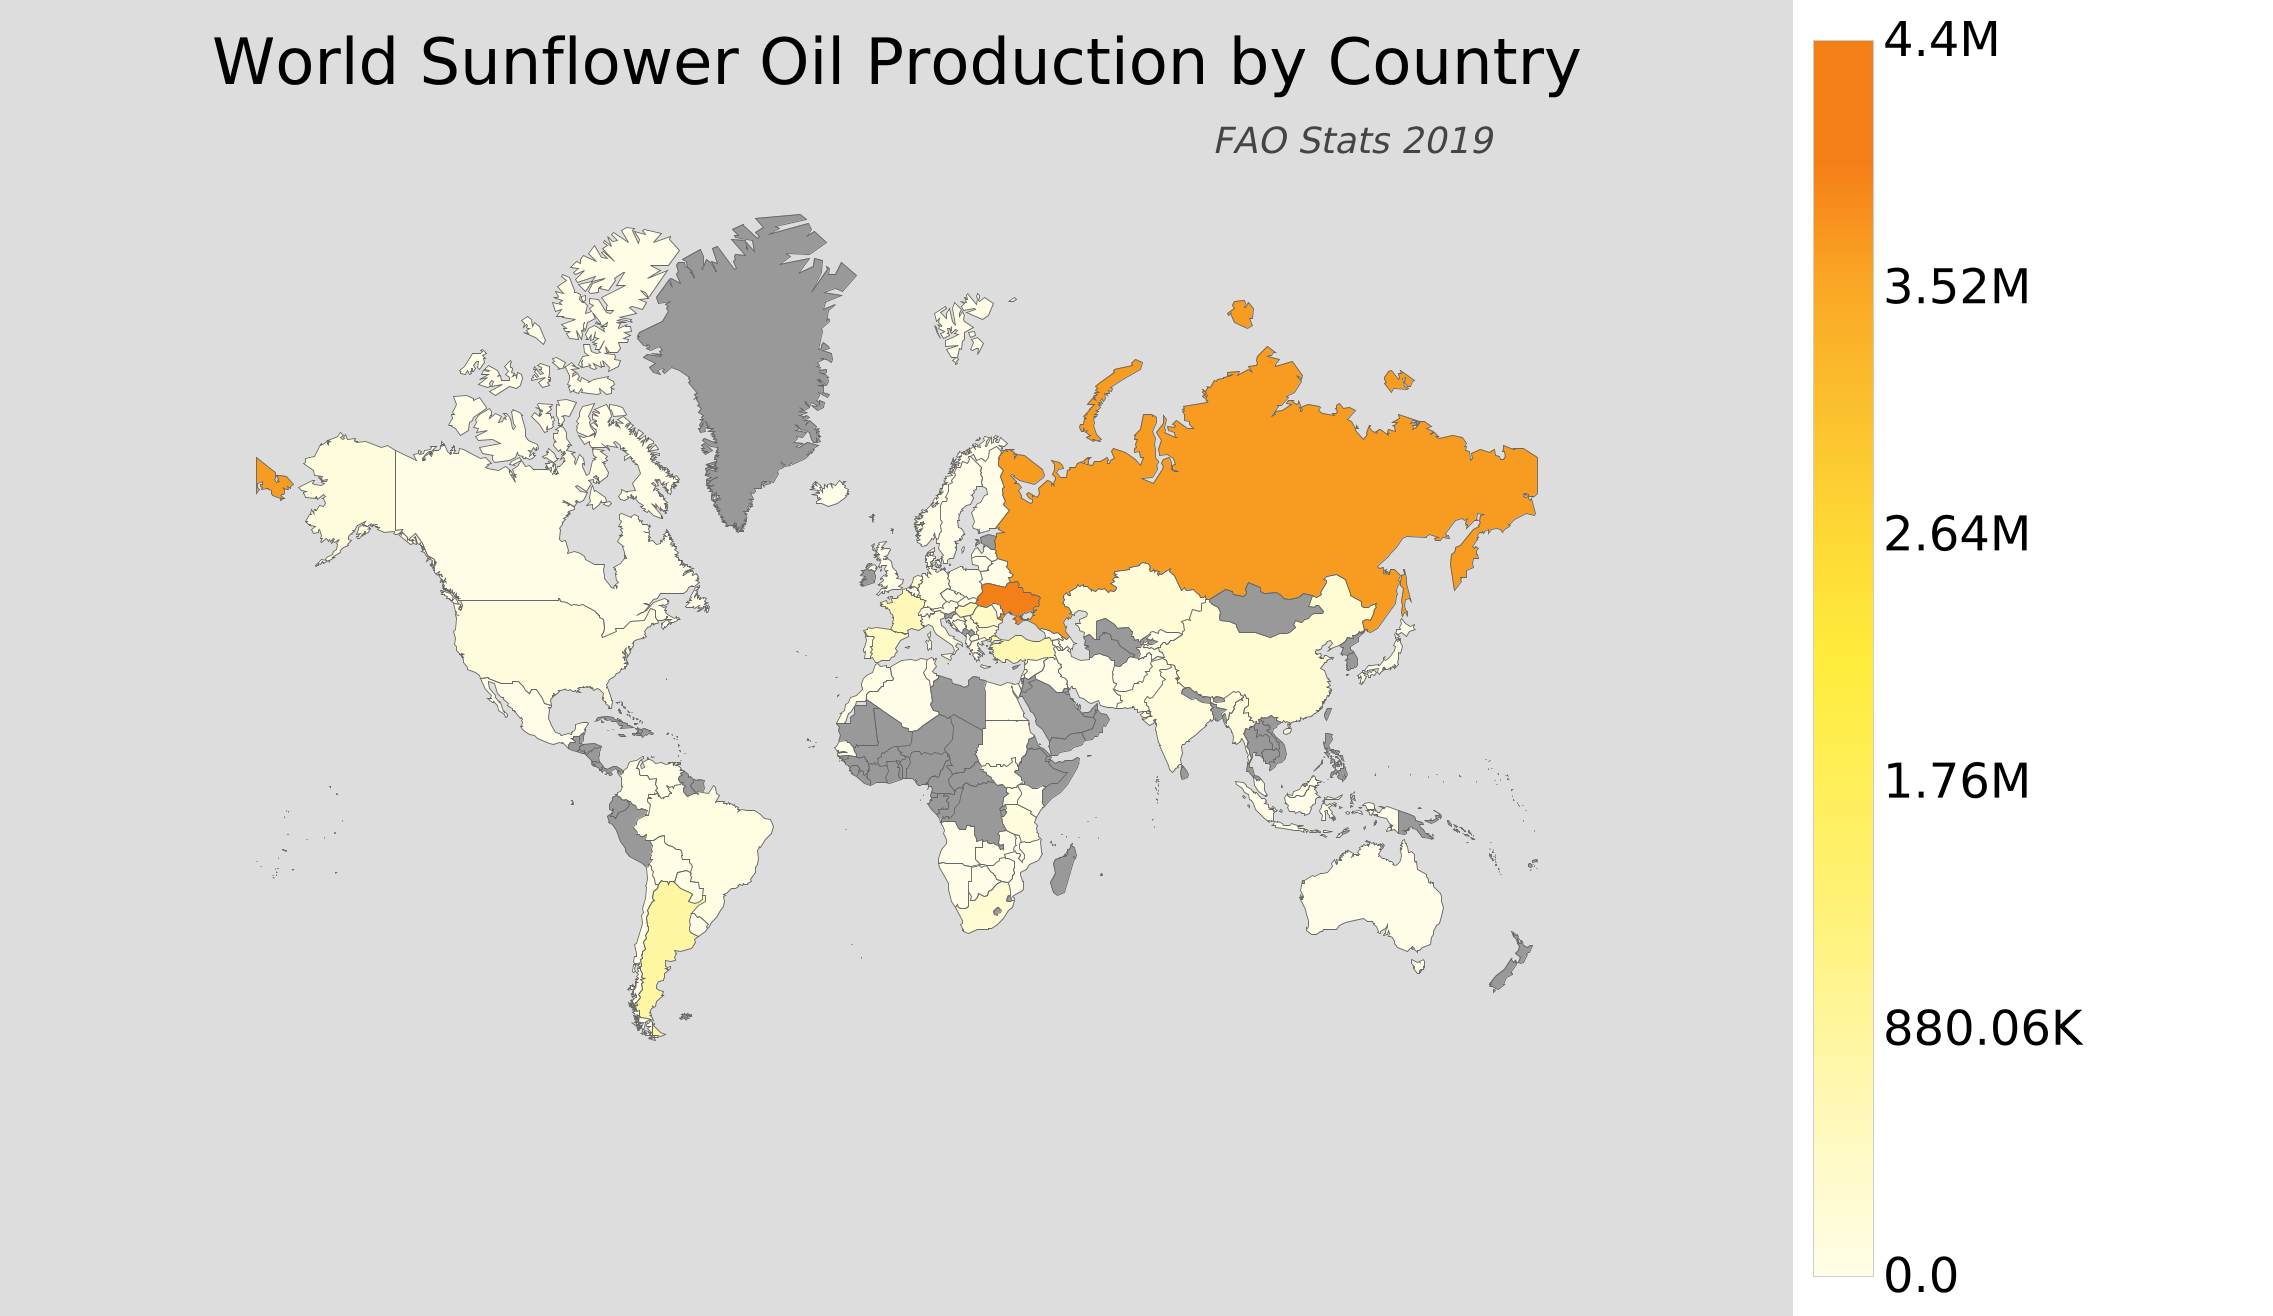 World Sunflower Oil Production